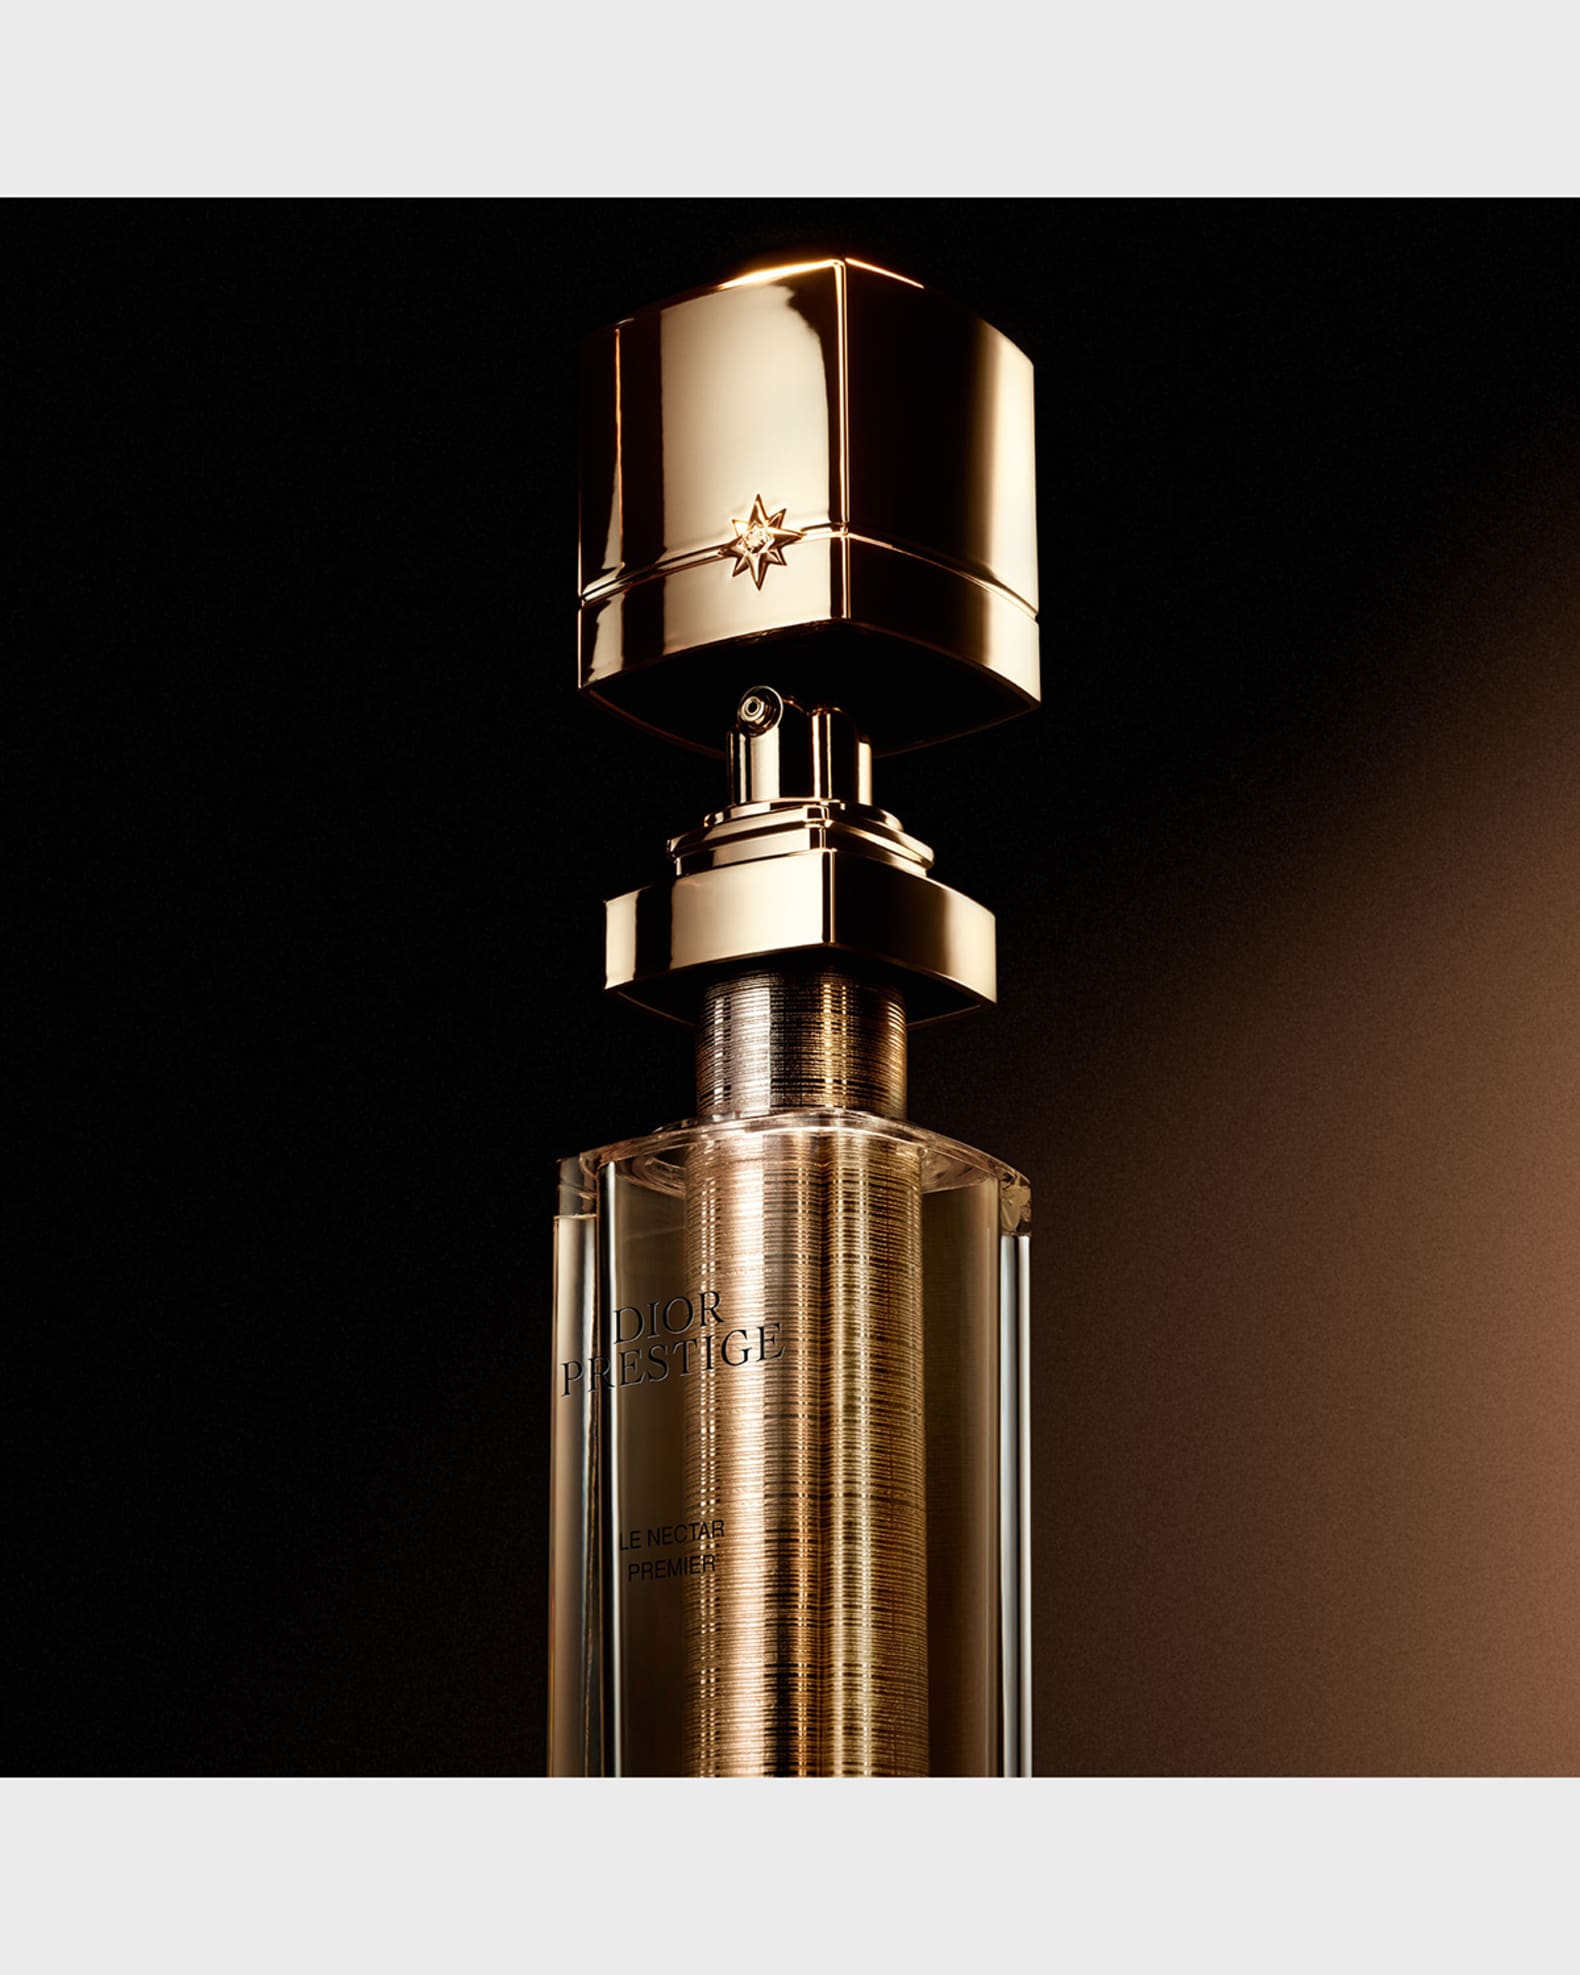 Dior Dior Prestige Le Nectar Premier Intensive Revitalizing Serum ...